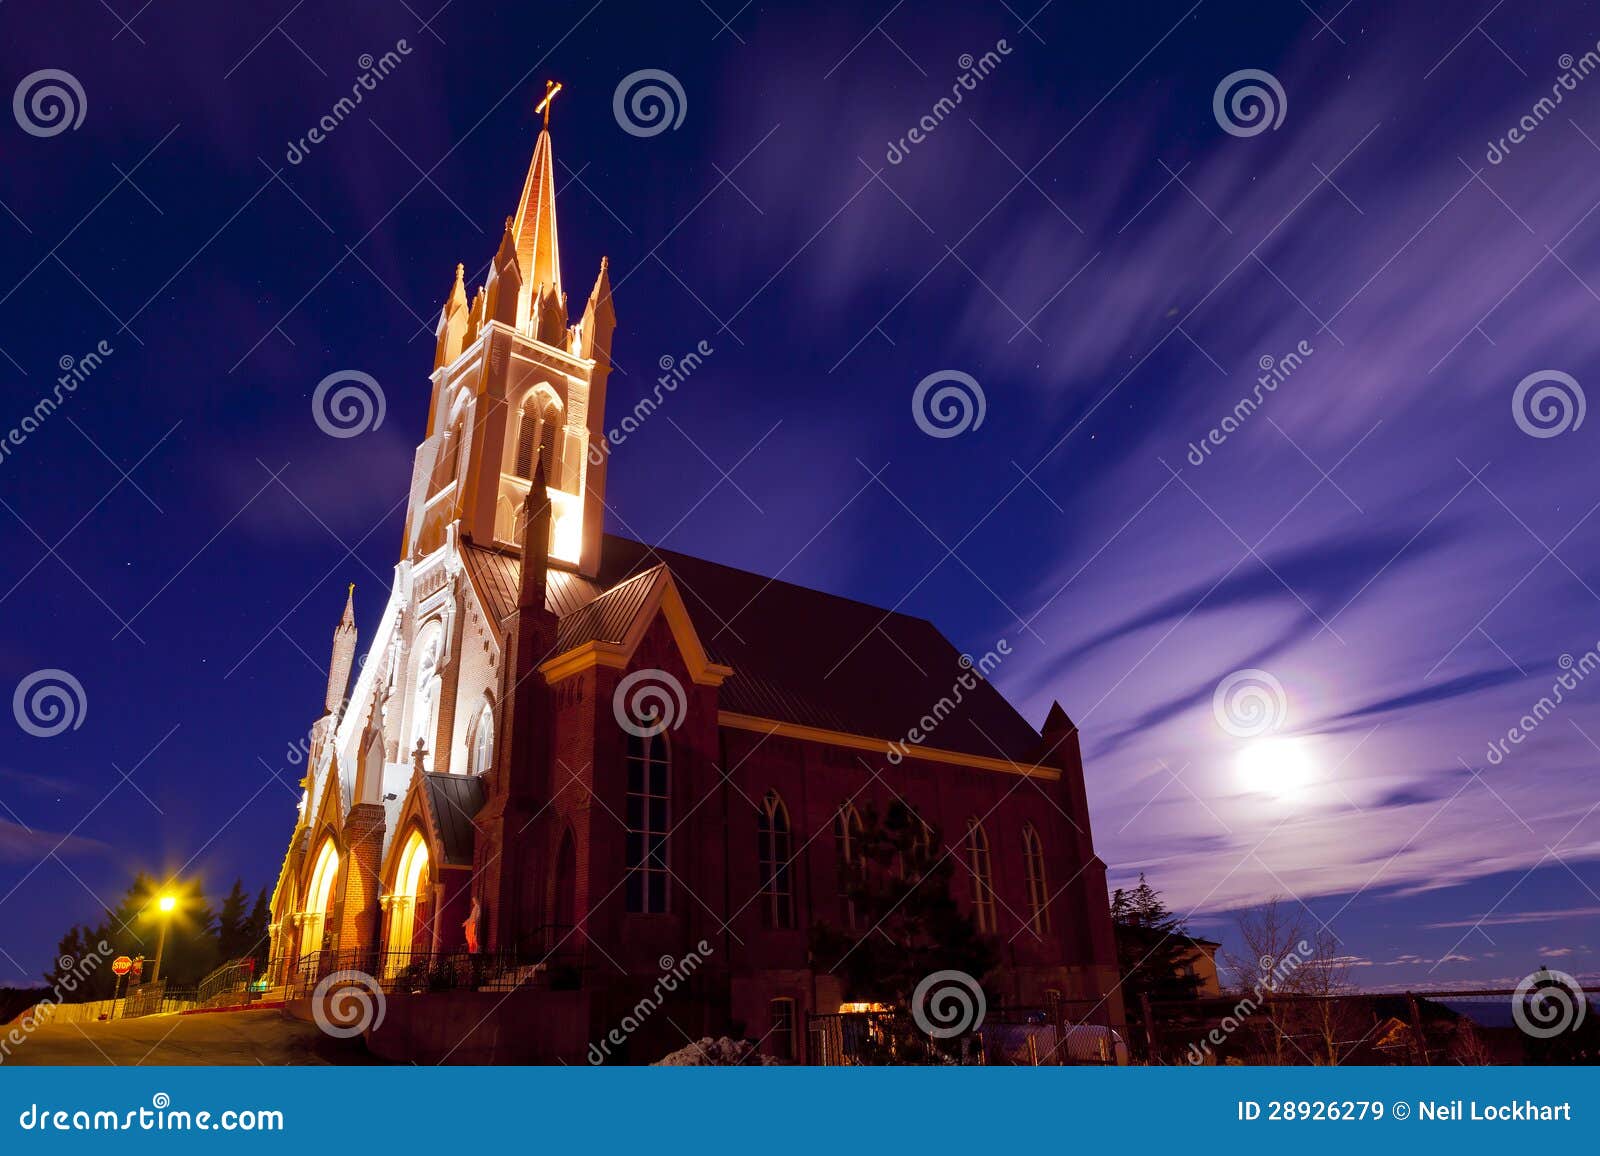 saint marys church at night